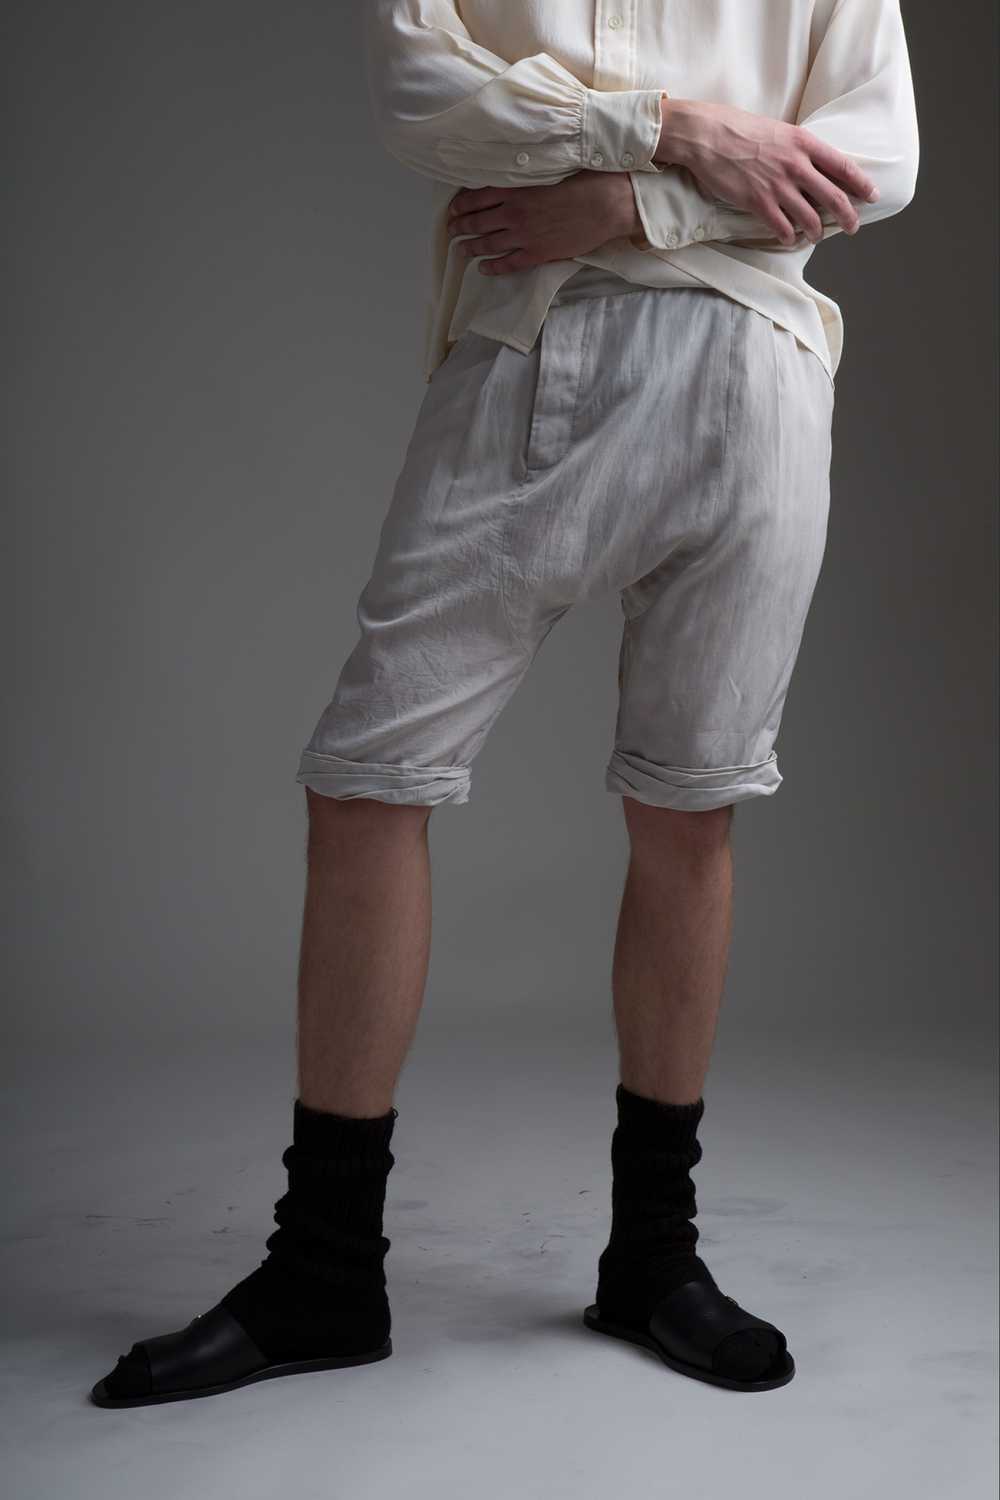 Phillip Lim Men's Shorts - image 3